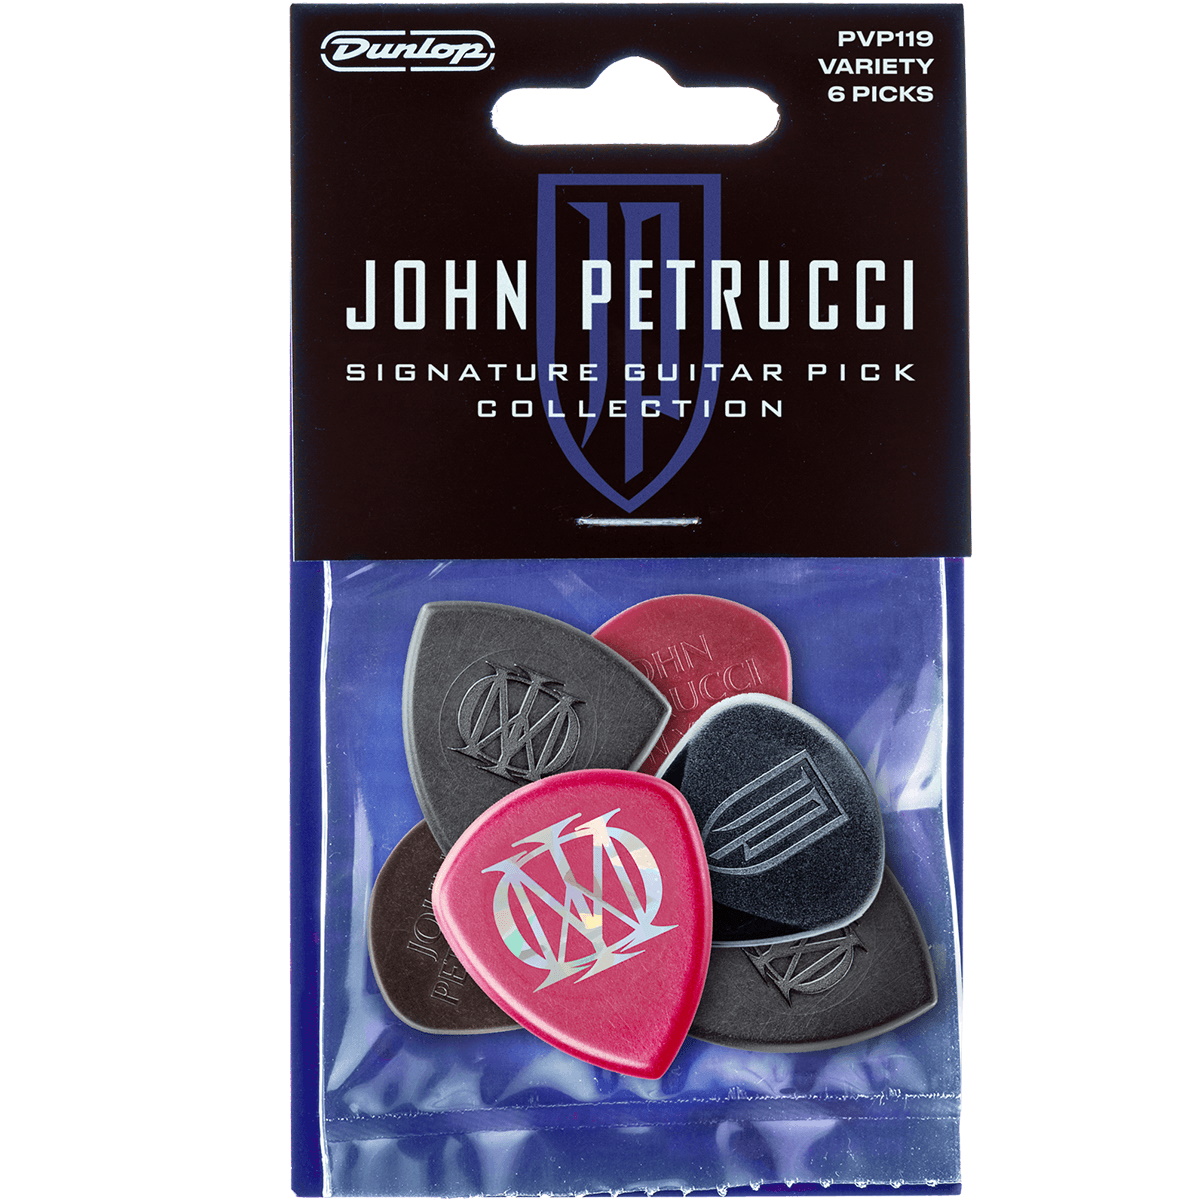 Dunlop Variety Pack PVP119 John Petrucci Signature